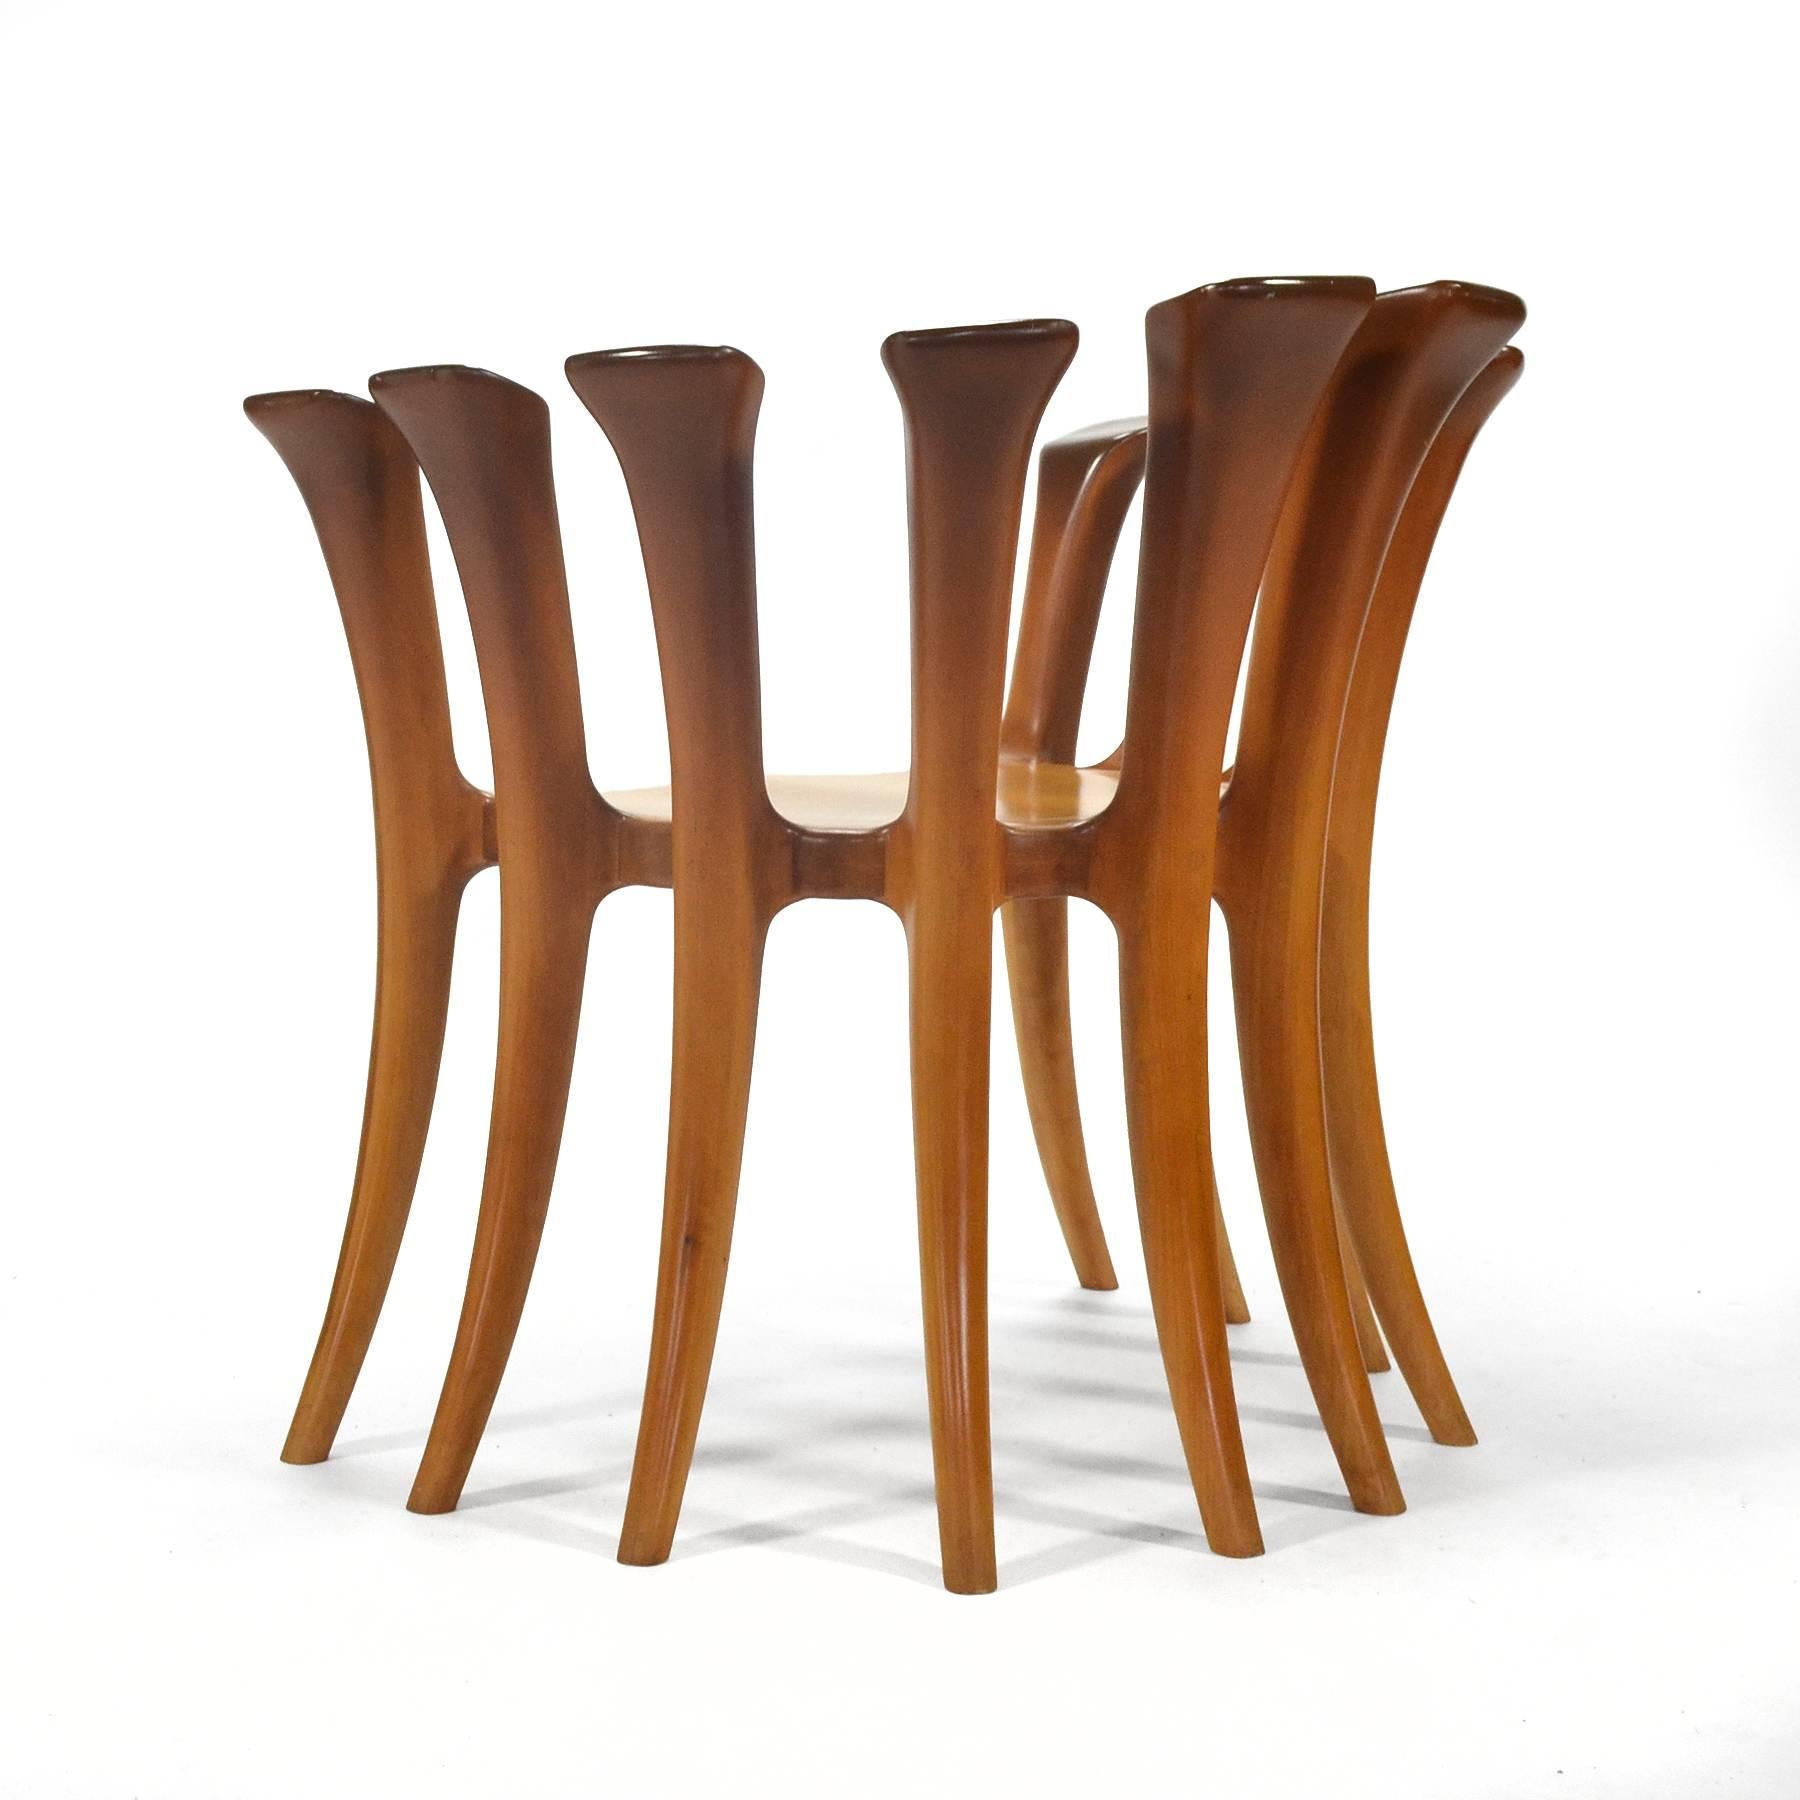 20th Century Studio Craft Chair